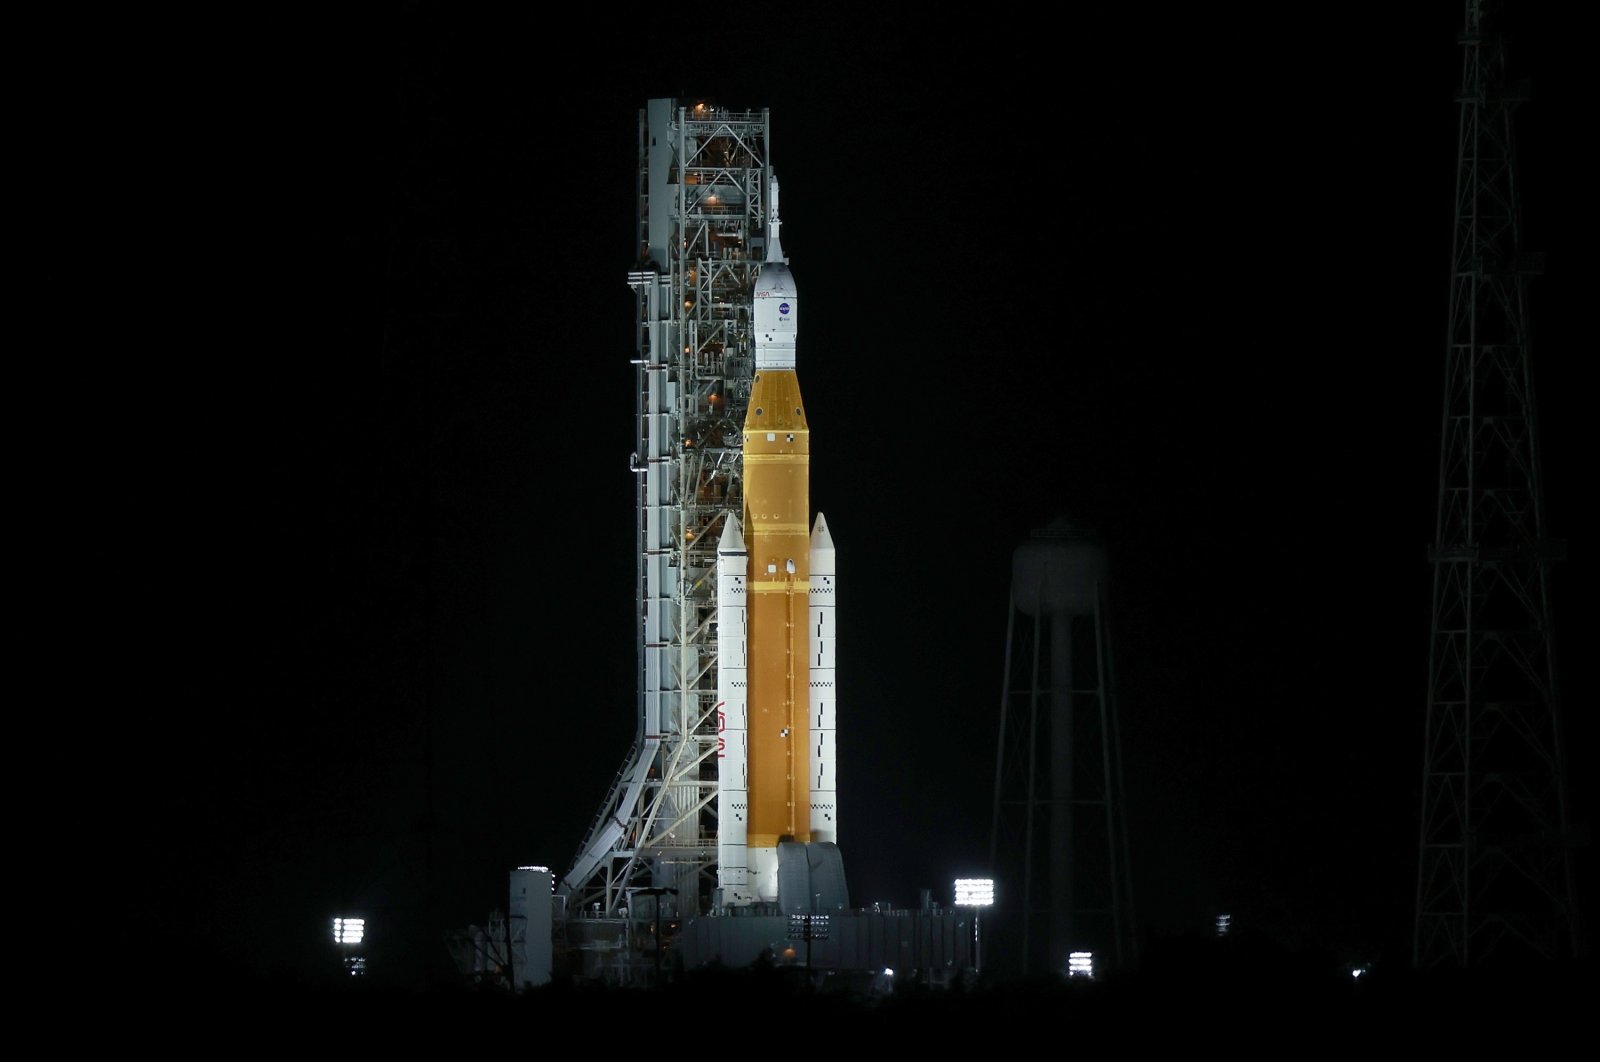 Setelah upaya dibatalkan, peluncuran bulan NASA diragukan untuk bulan ini